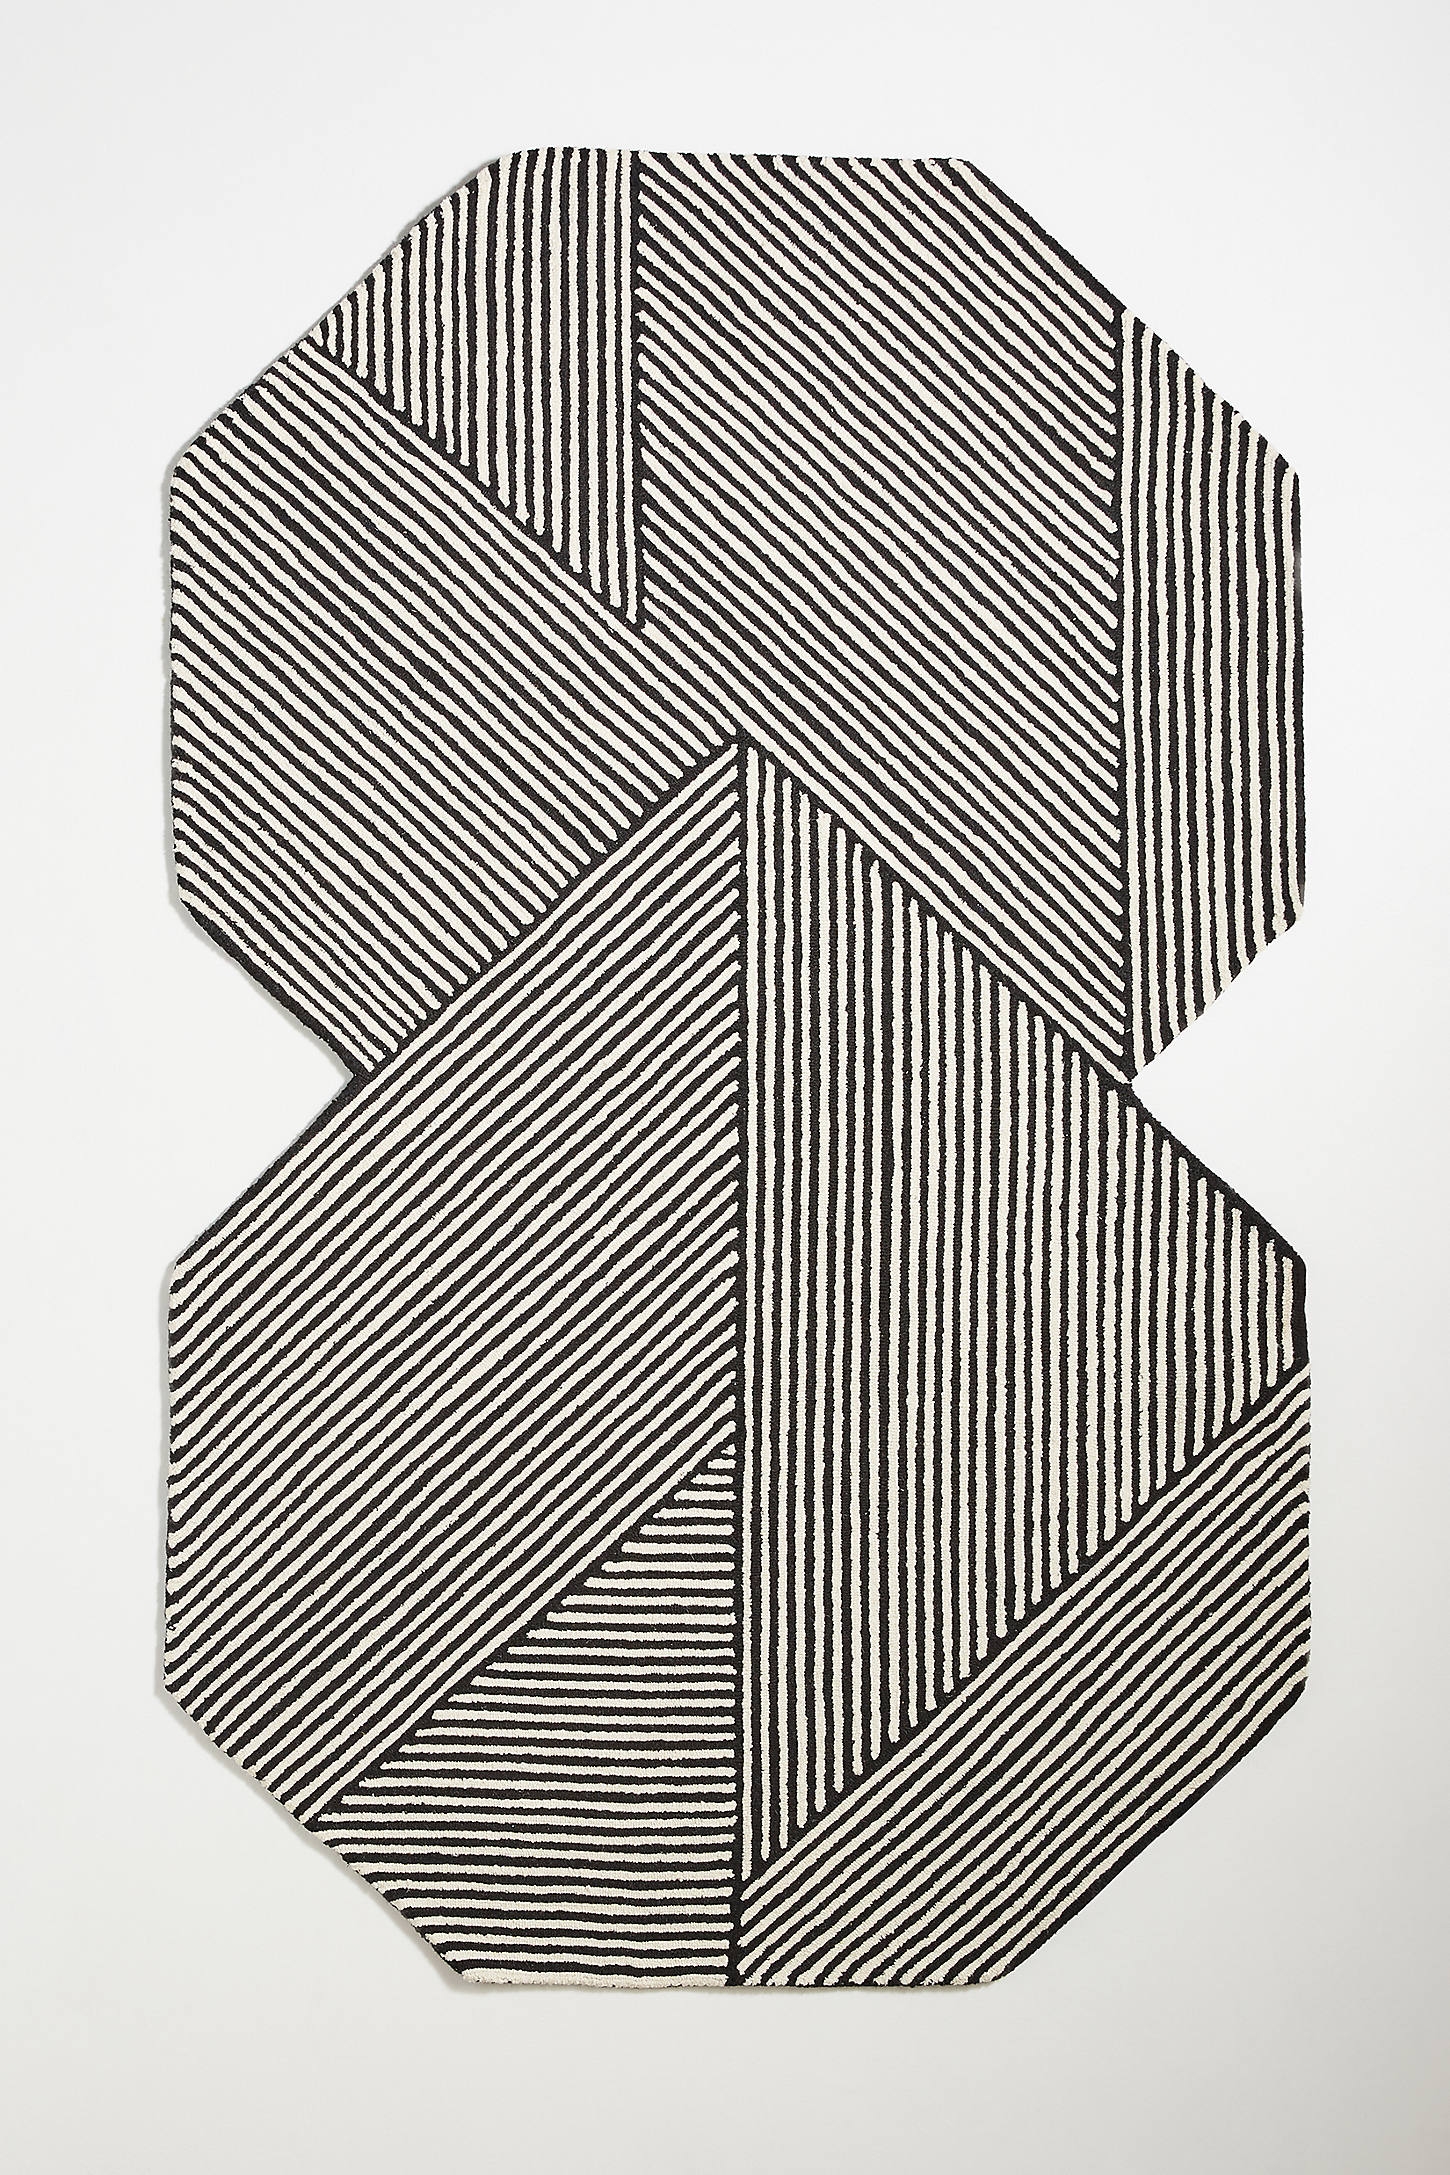 Tufted Stripe Illusion Rug - Image 0